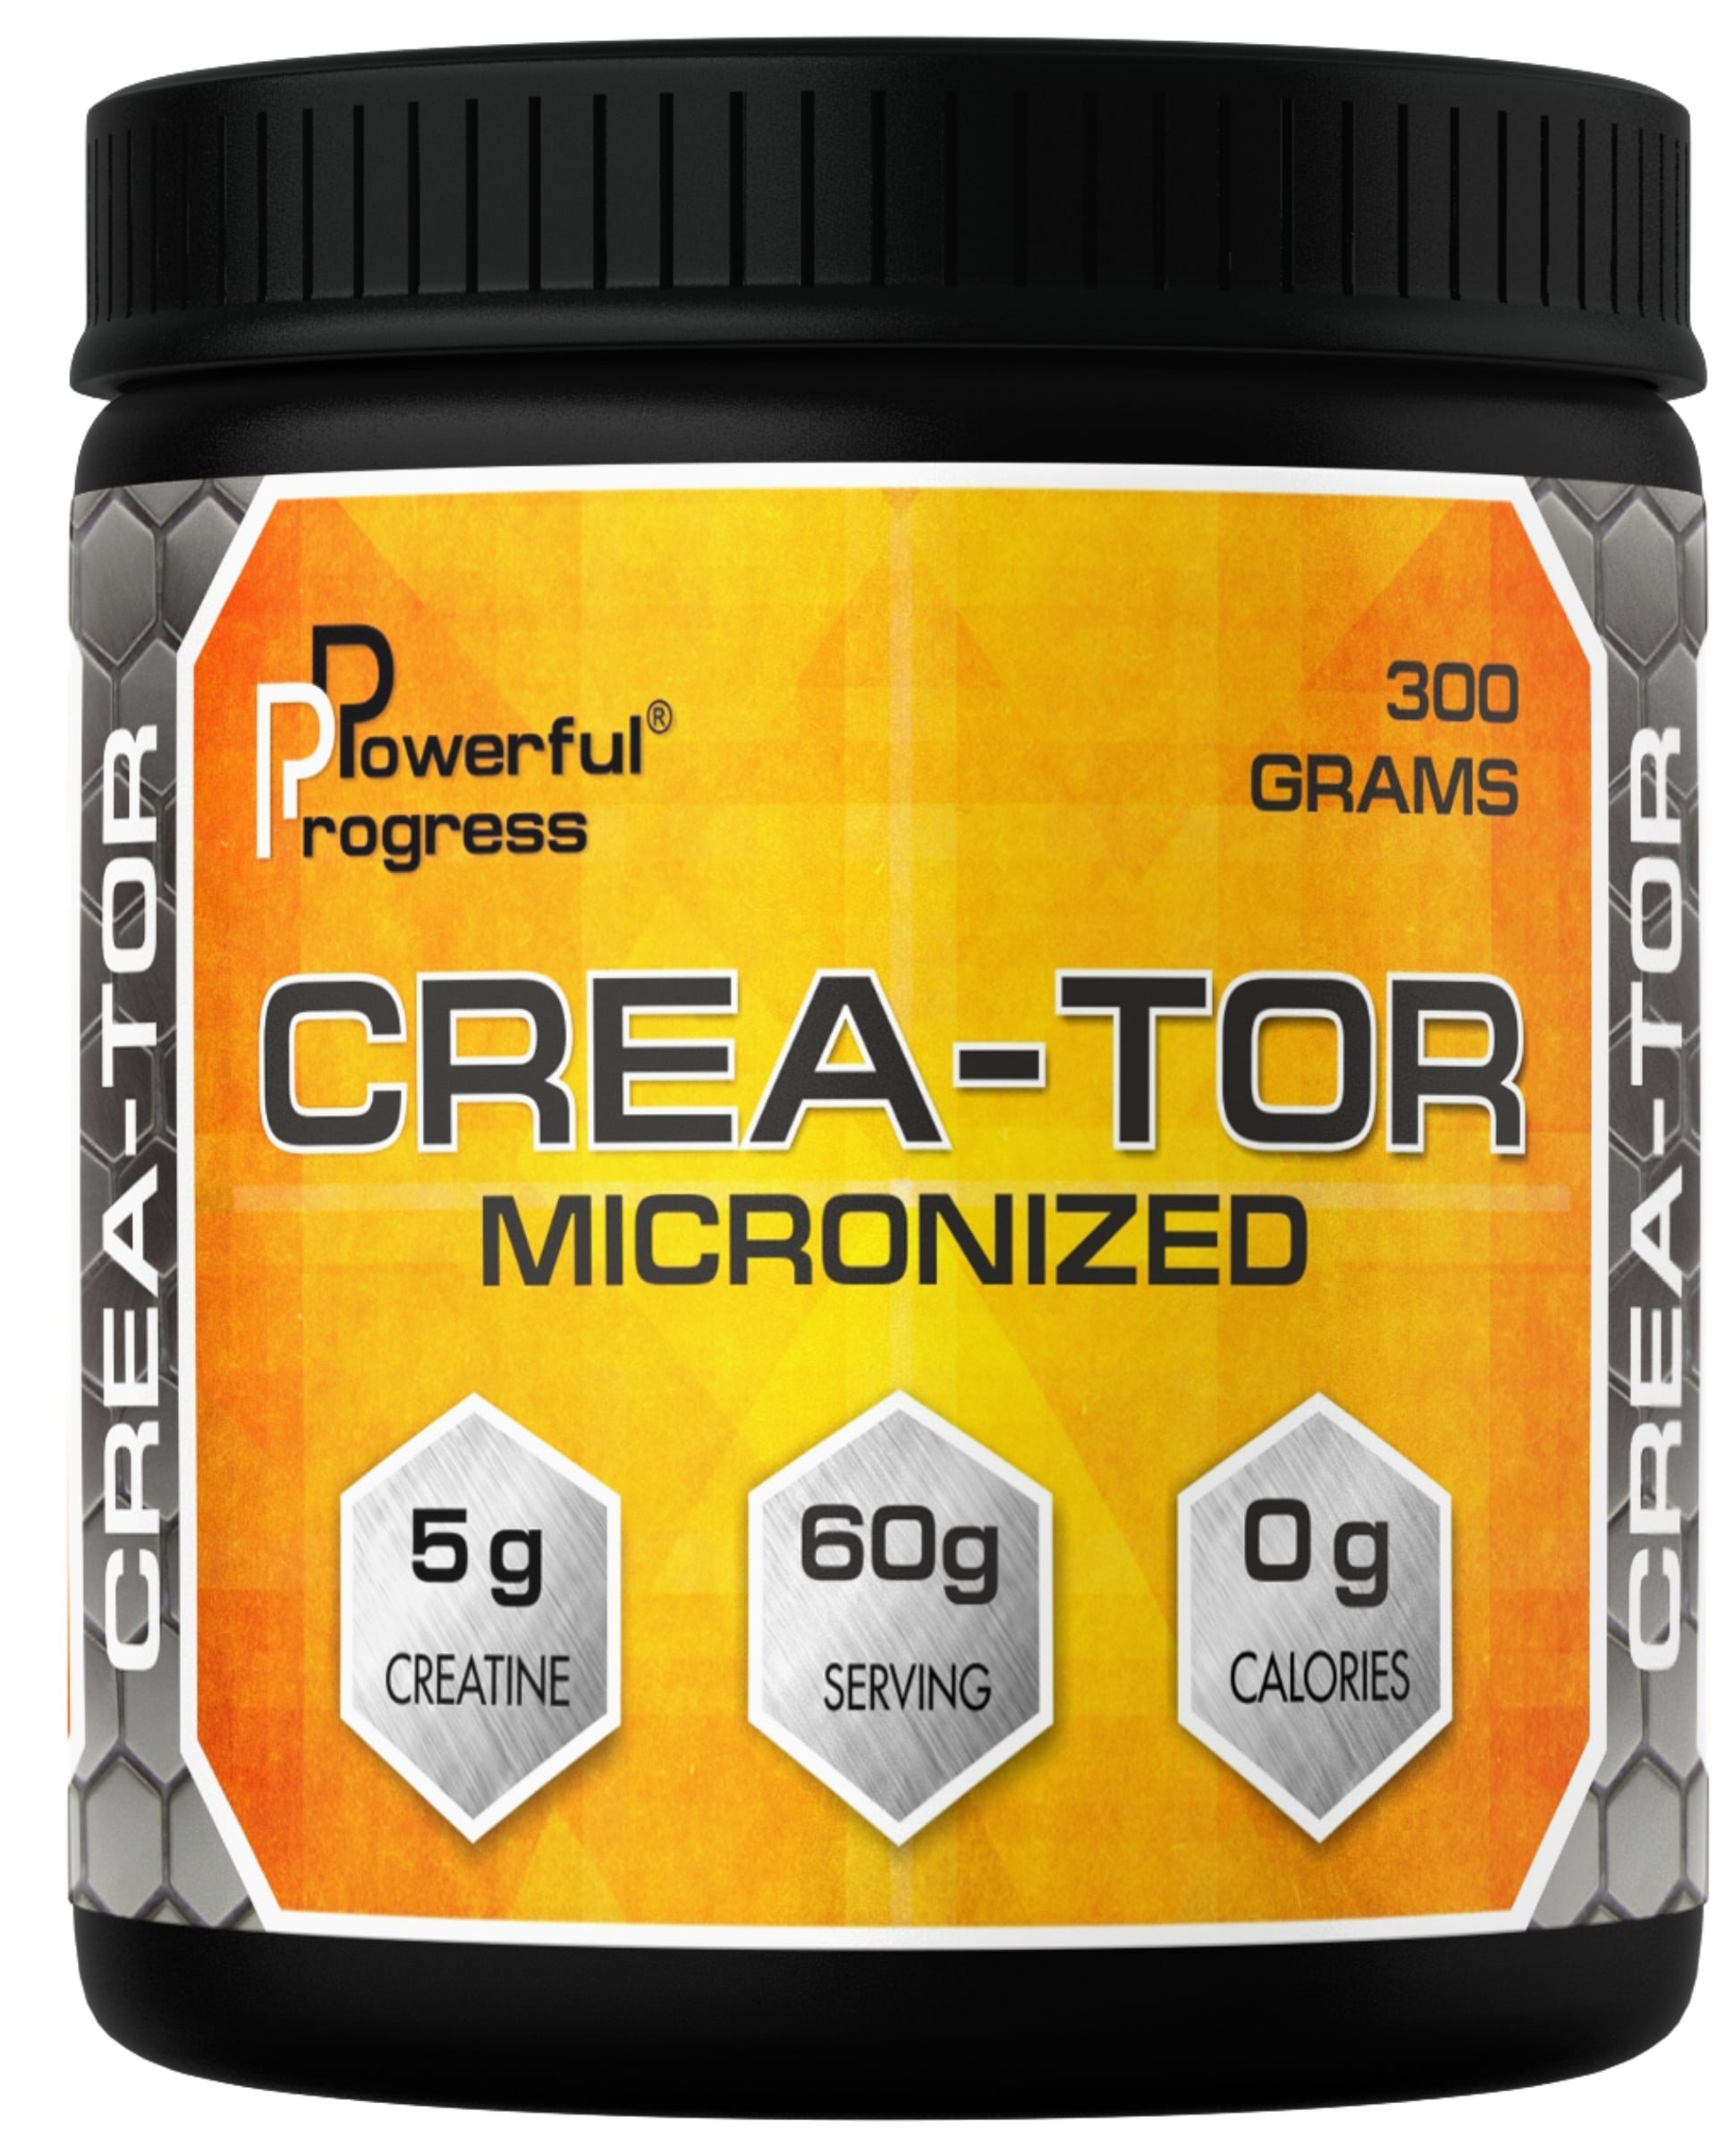 Crea-Tor Micronized, 300 g, Powerful Progress. Monohidrato de creatina. Mass Gain Energy & Endurance Strength enhancement 